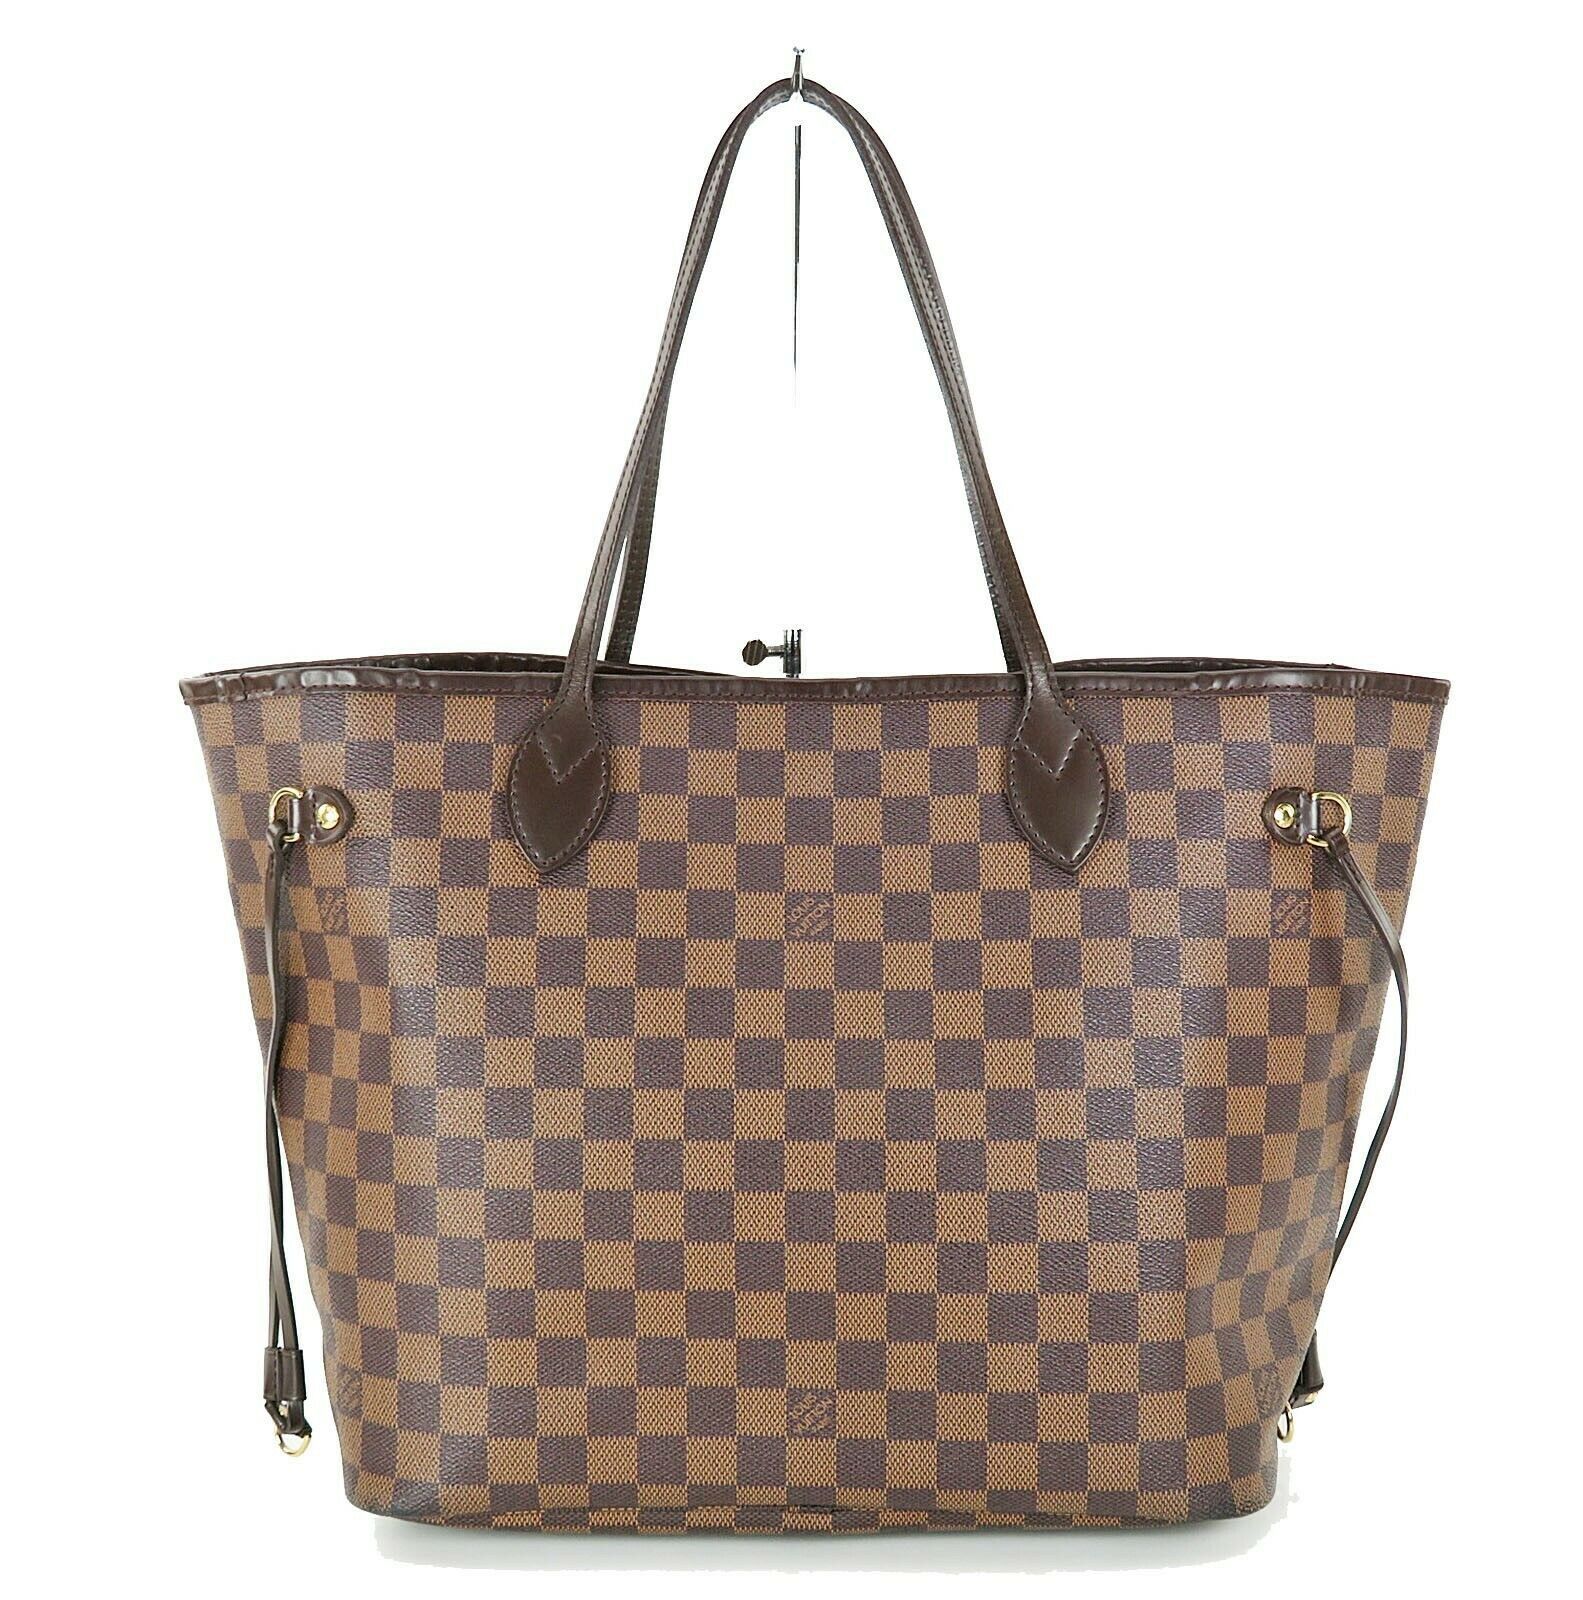 Authentic LOUIS VUITTON Neverfull MM Damier Ebene Tote Bag Purse #34370 - Women&#39;s Bags & Handbags